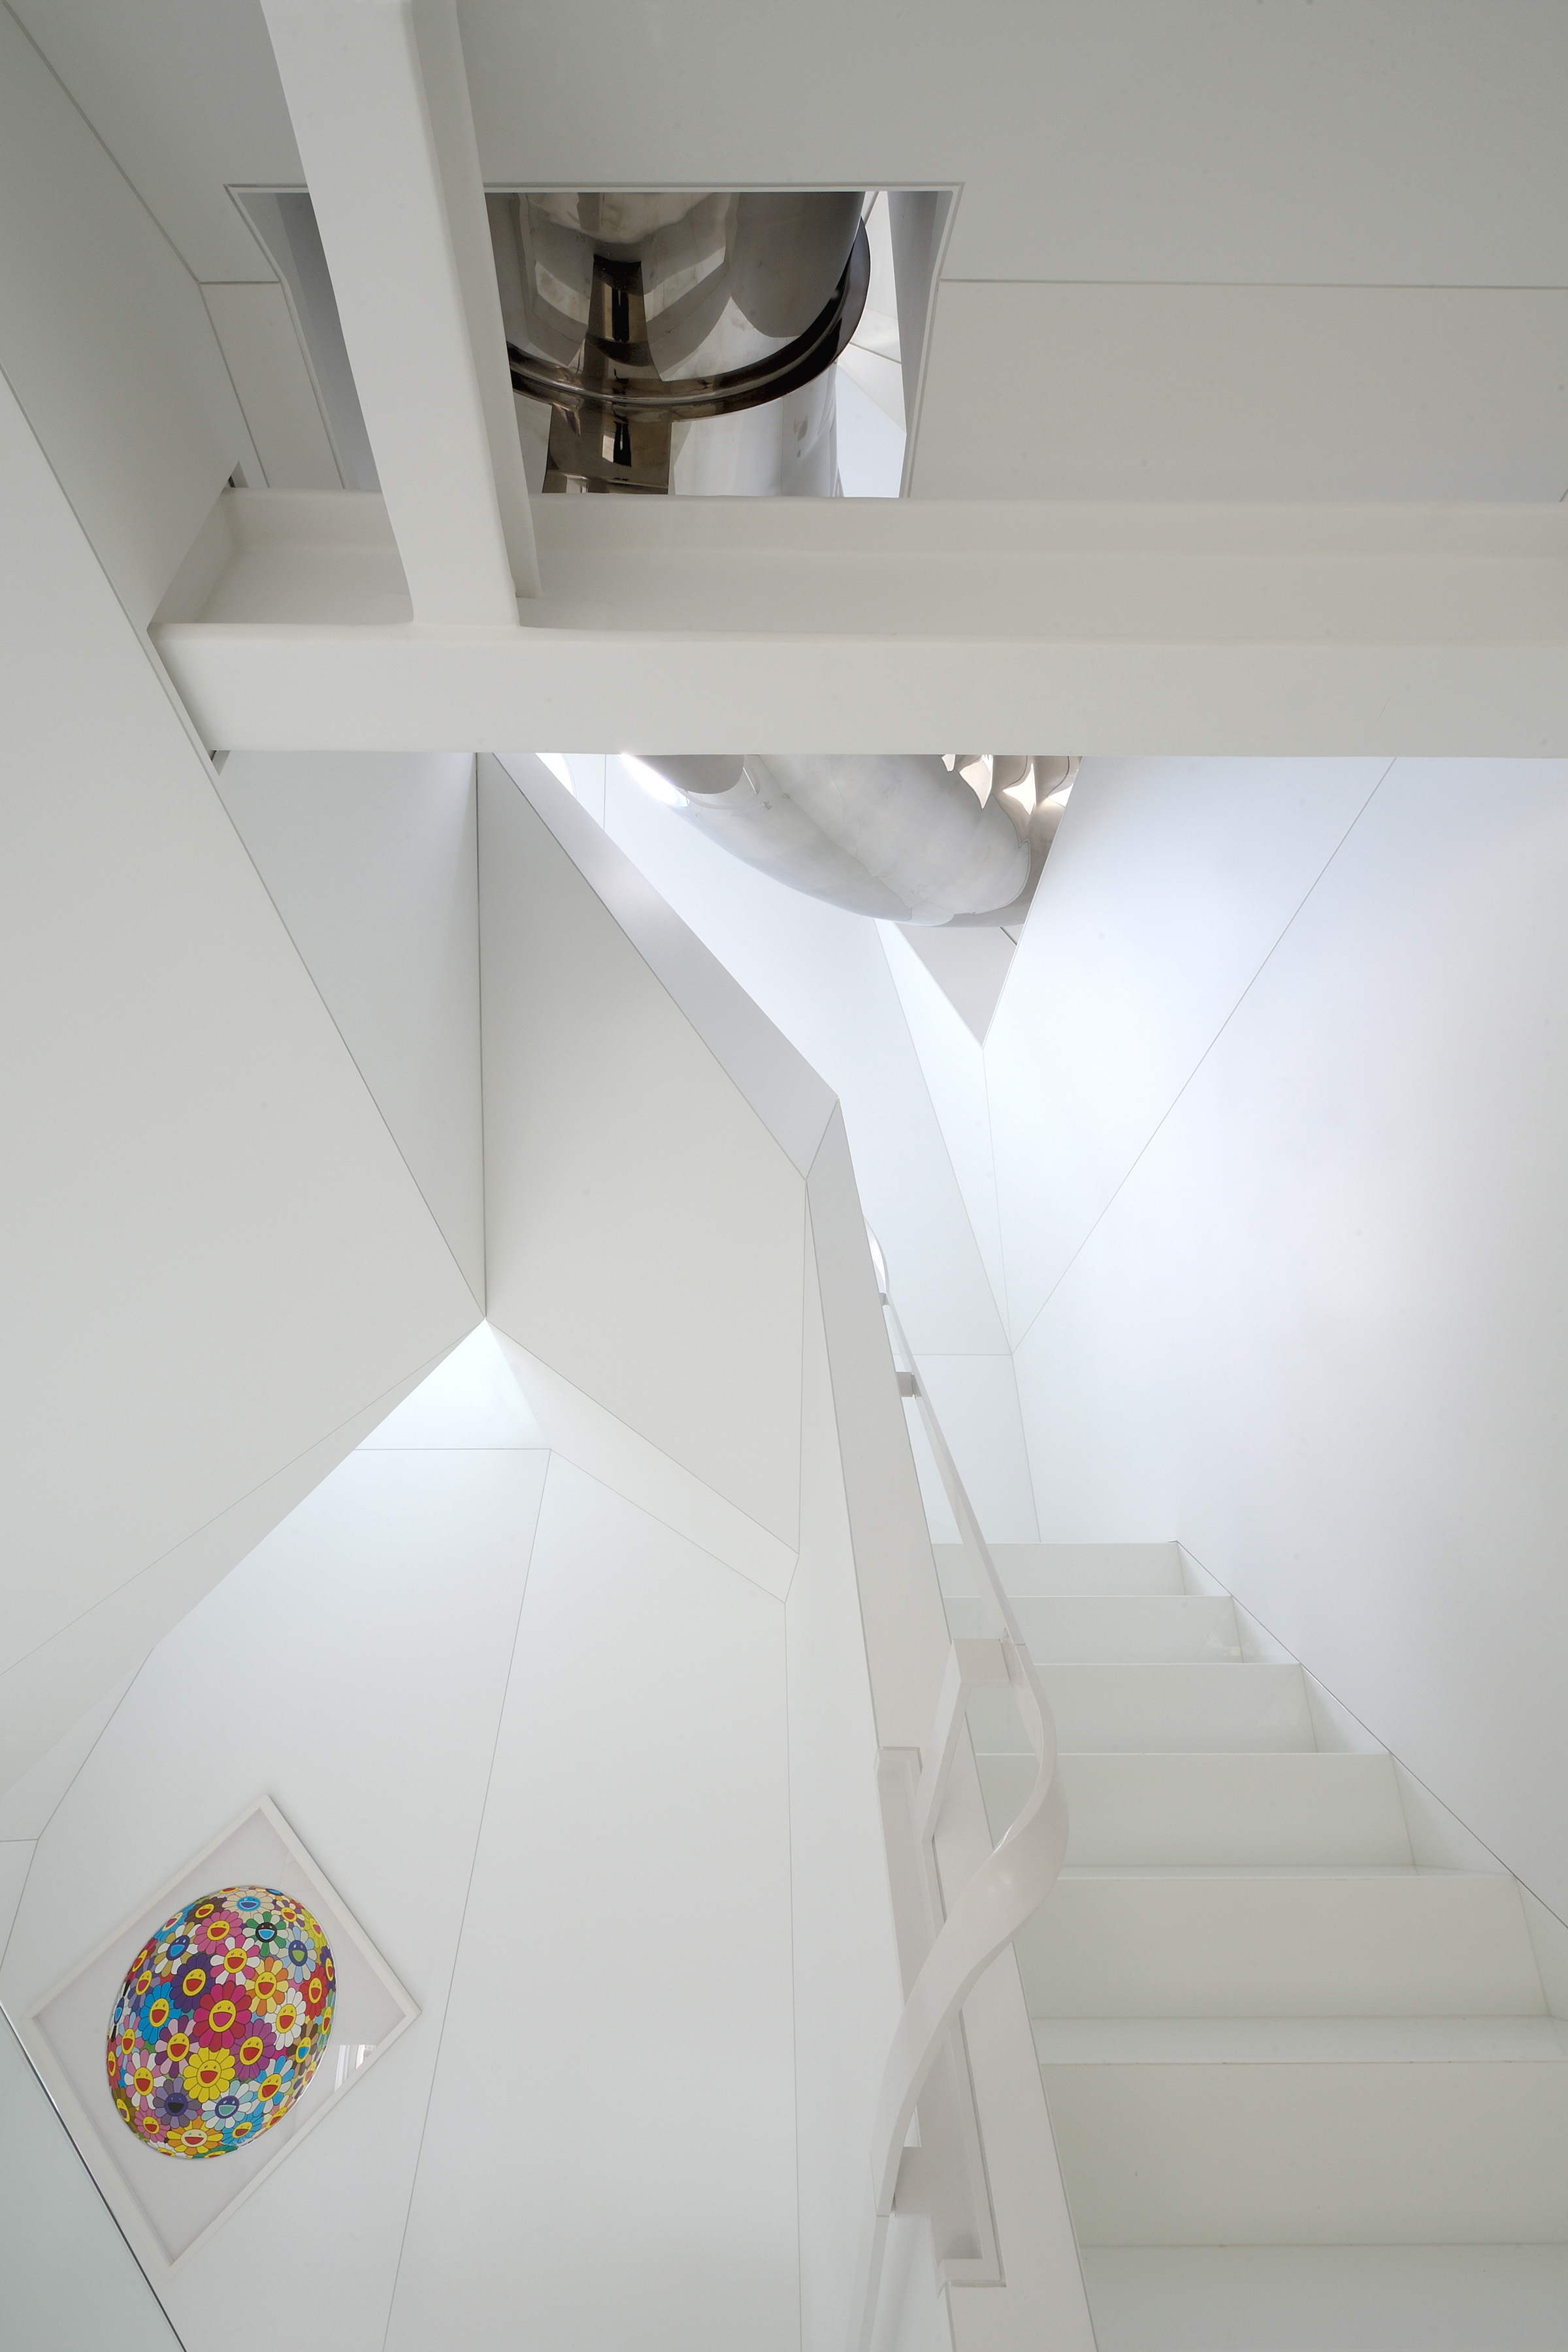 Skyhouse Slide / David Hotson Architect